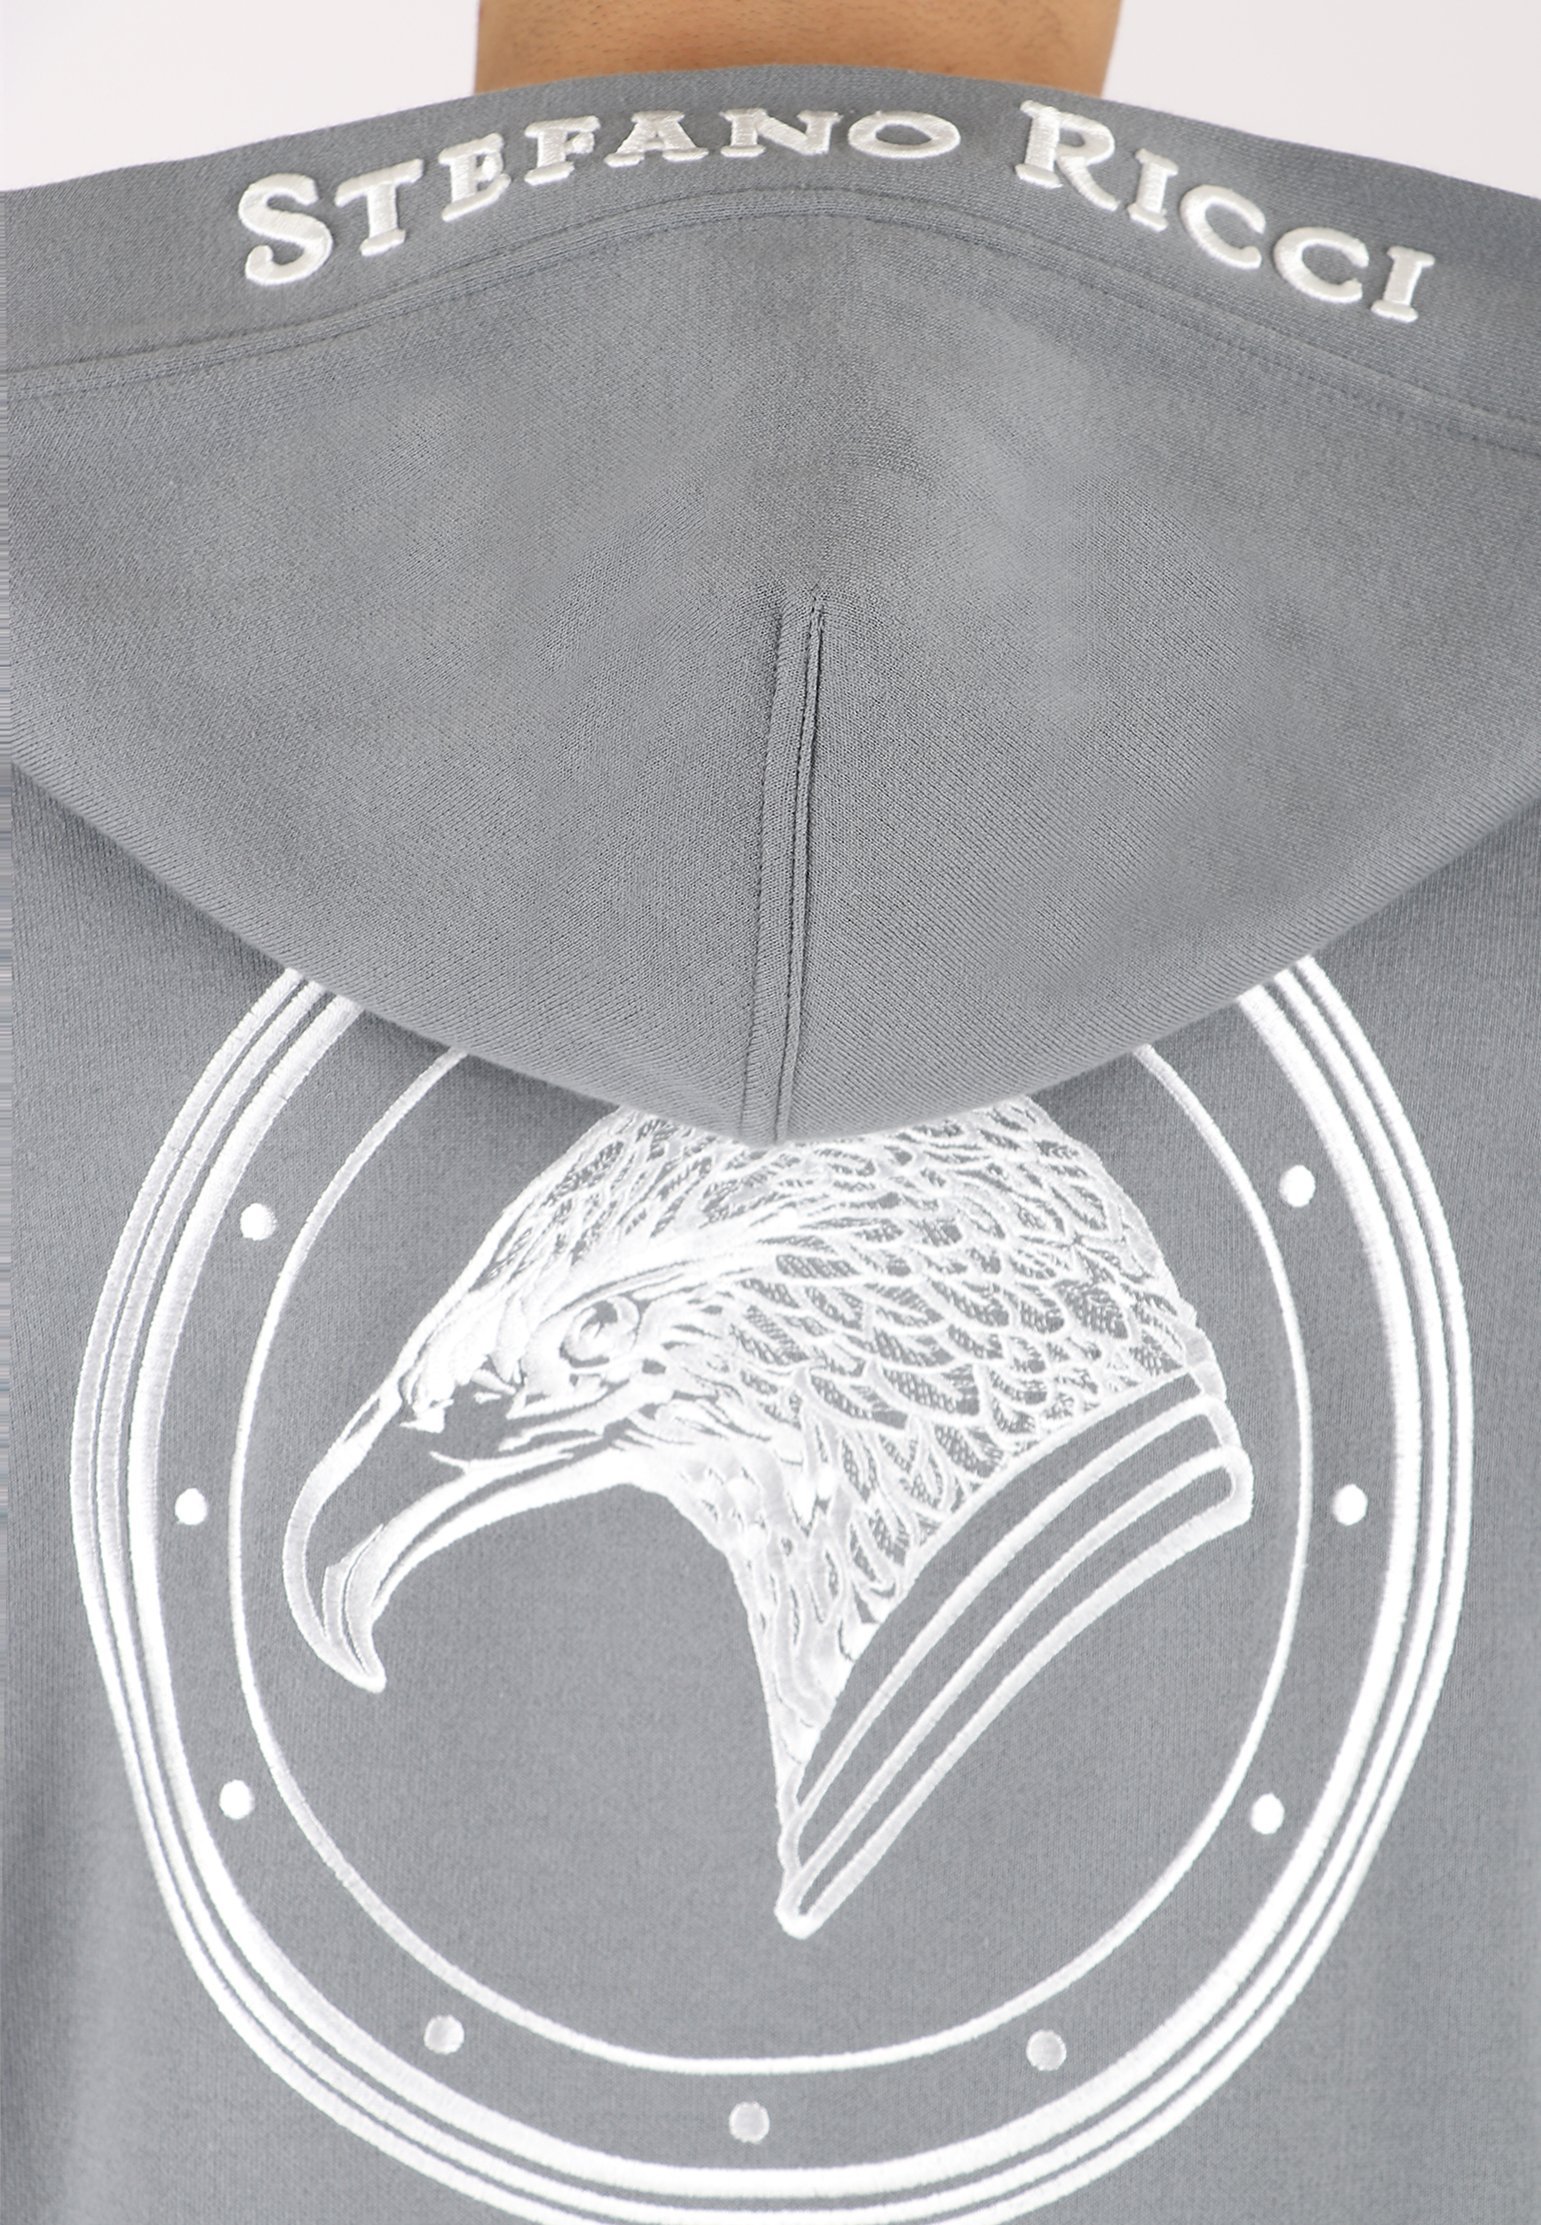 Jogging suit STEFANO RICCI Color: light grey (Code: 326) in online store Allure